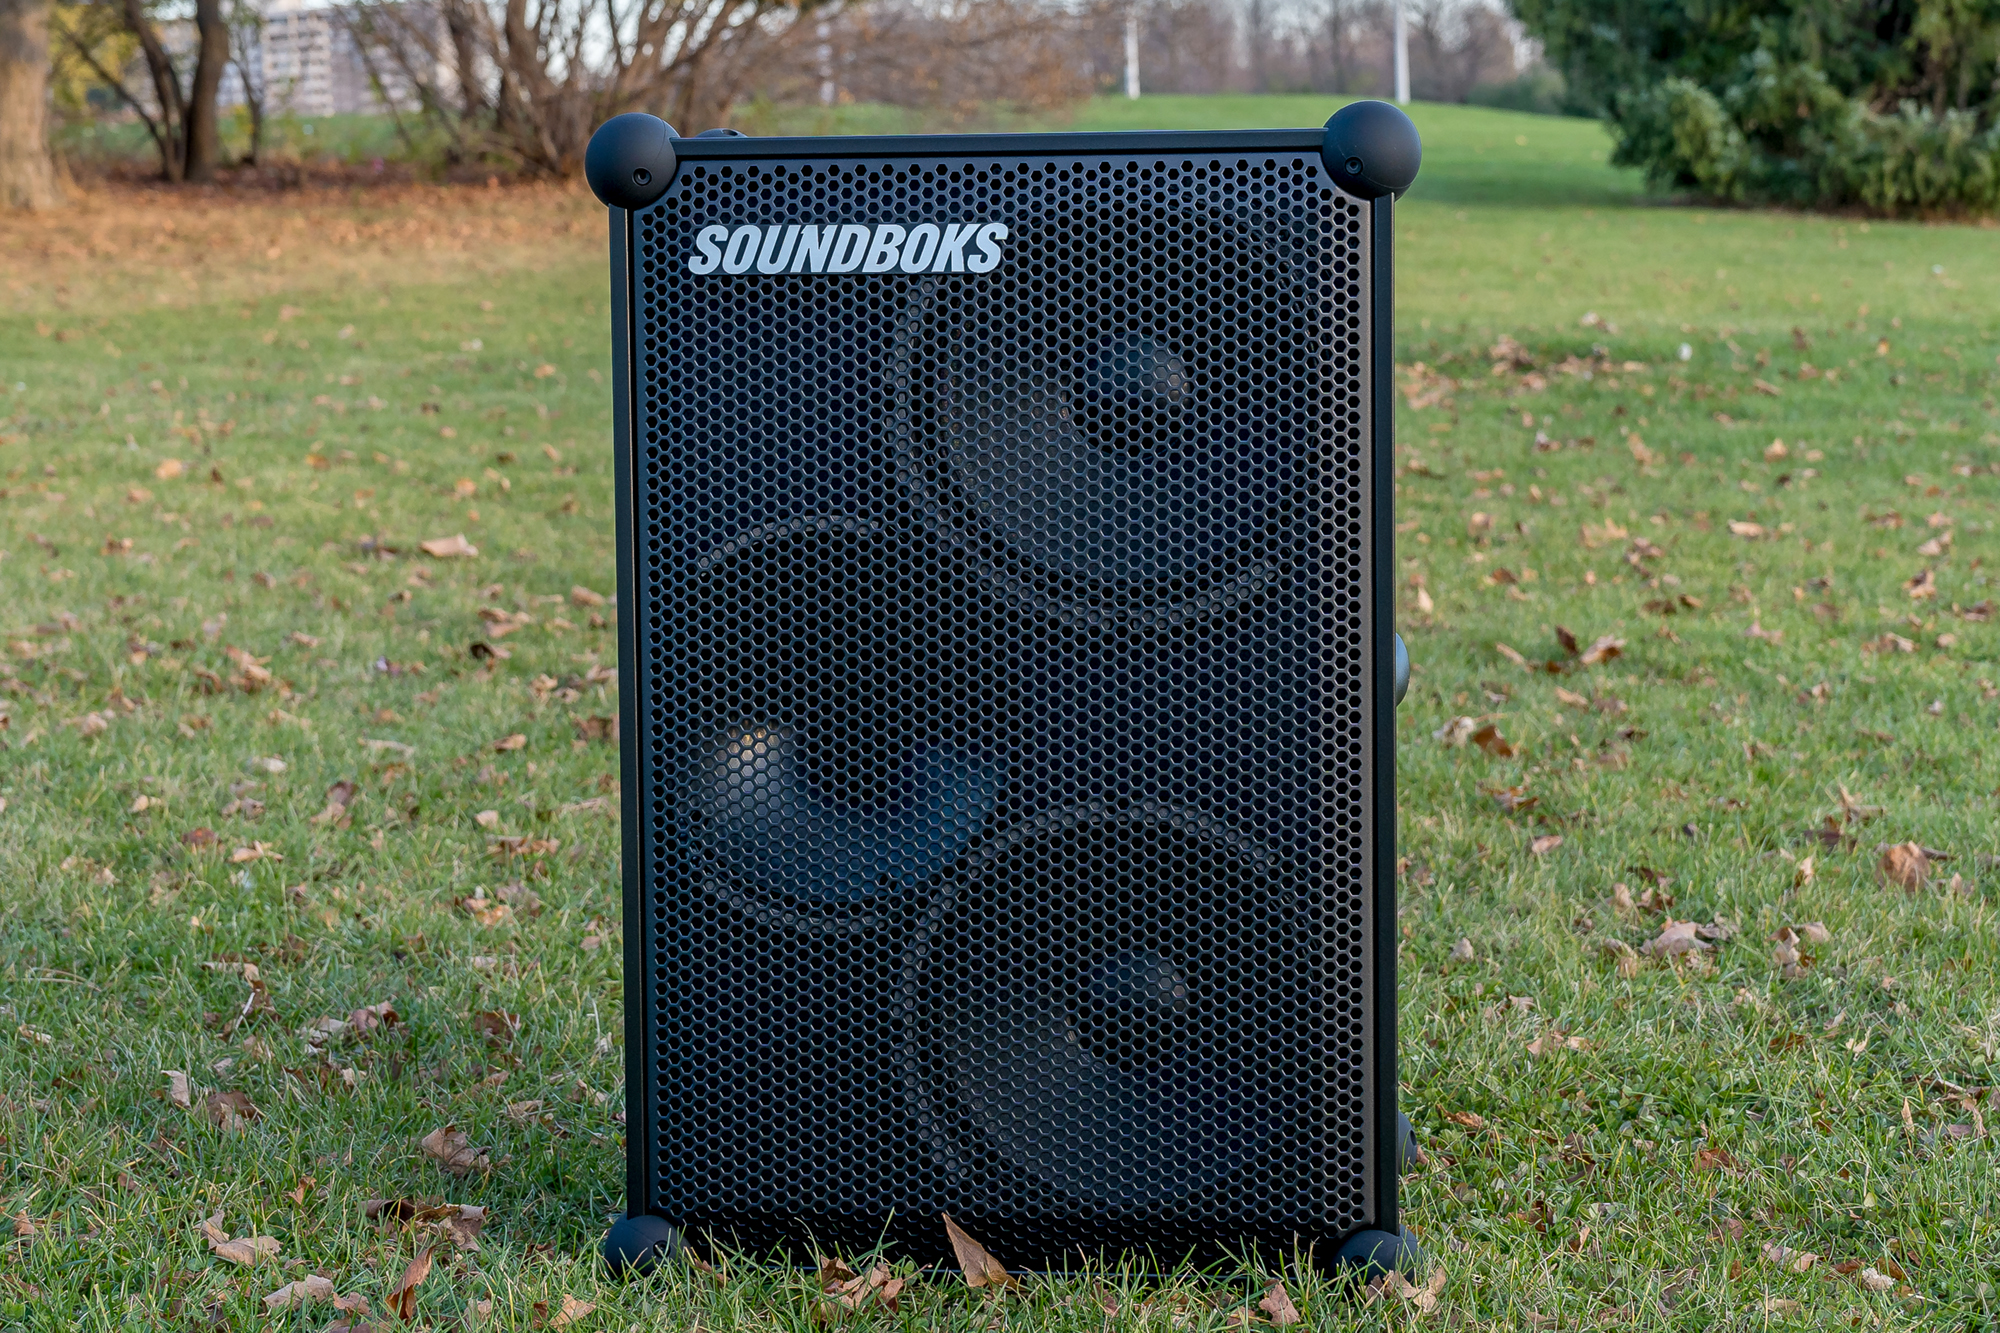 Wider view of Soundboks 4 in a park.